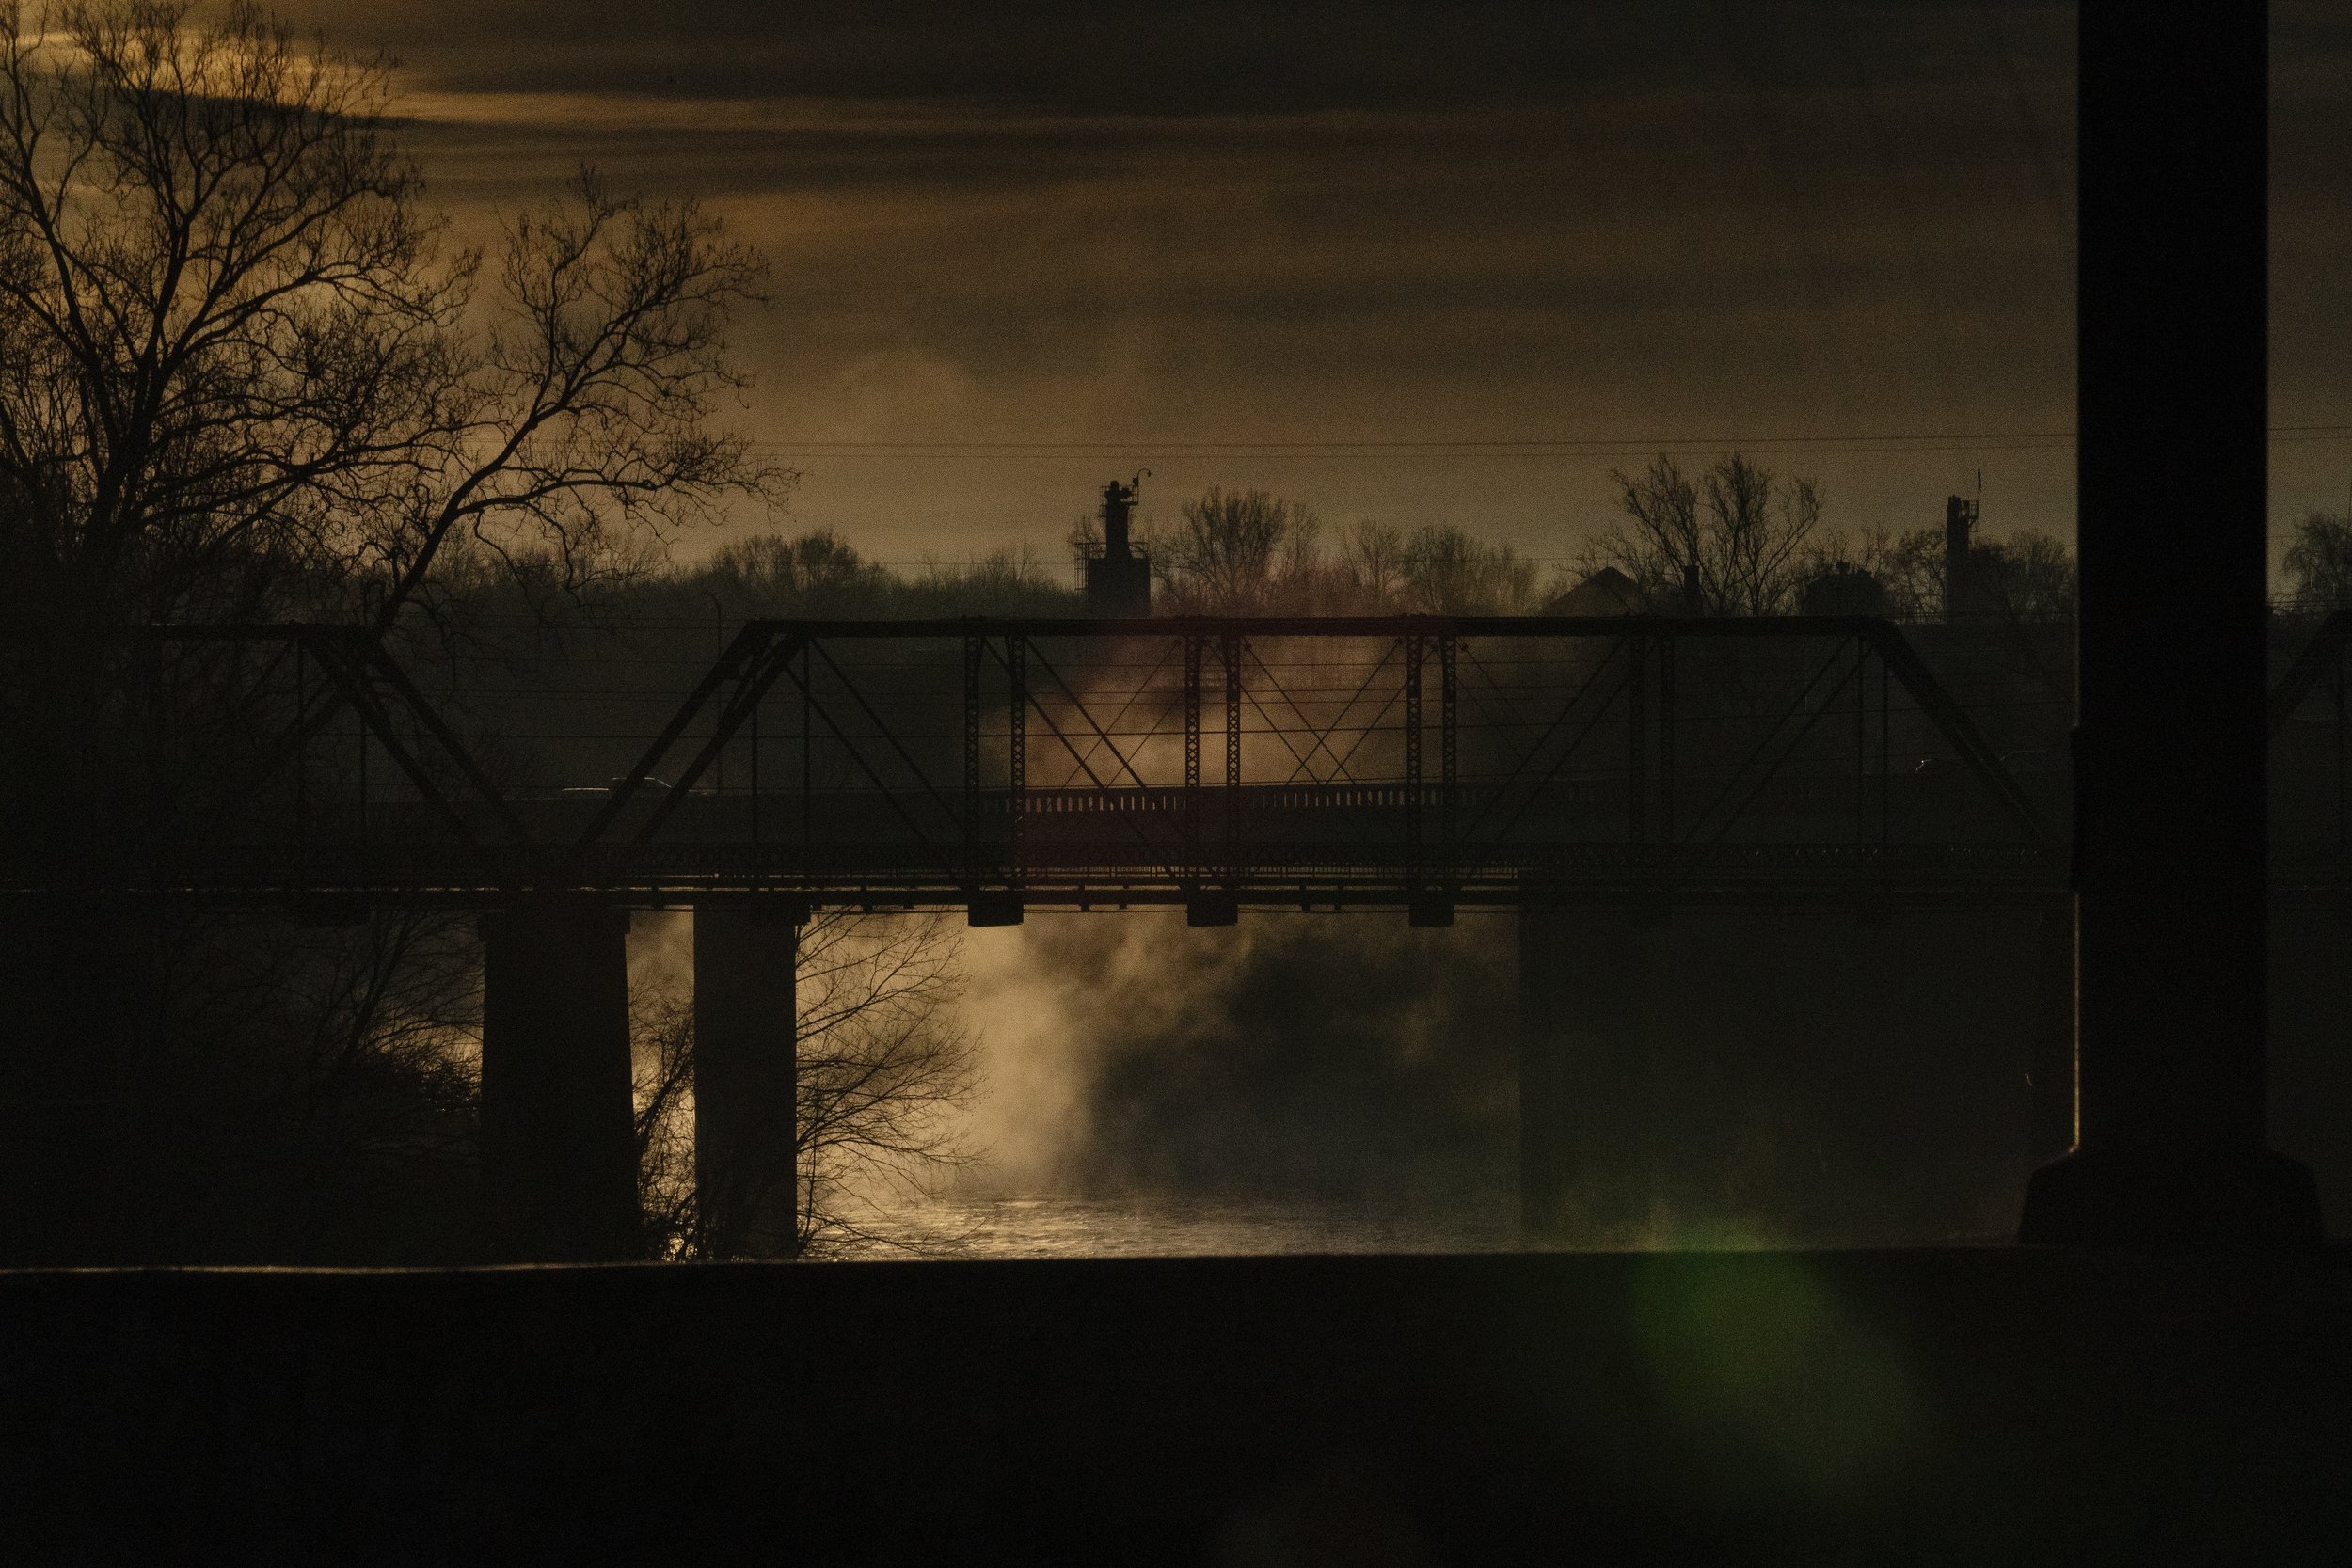  Morning fog rises over a walking bridge in Bowling Green, Ky., on Dec. 20, 2021. (AP Photo/Brynn Anderson) 